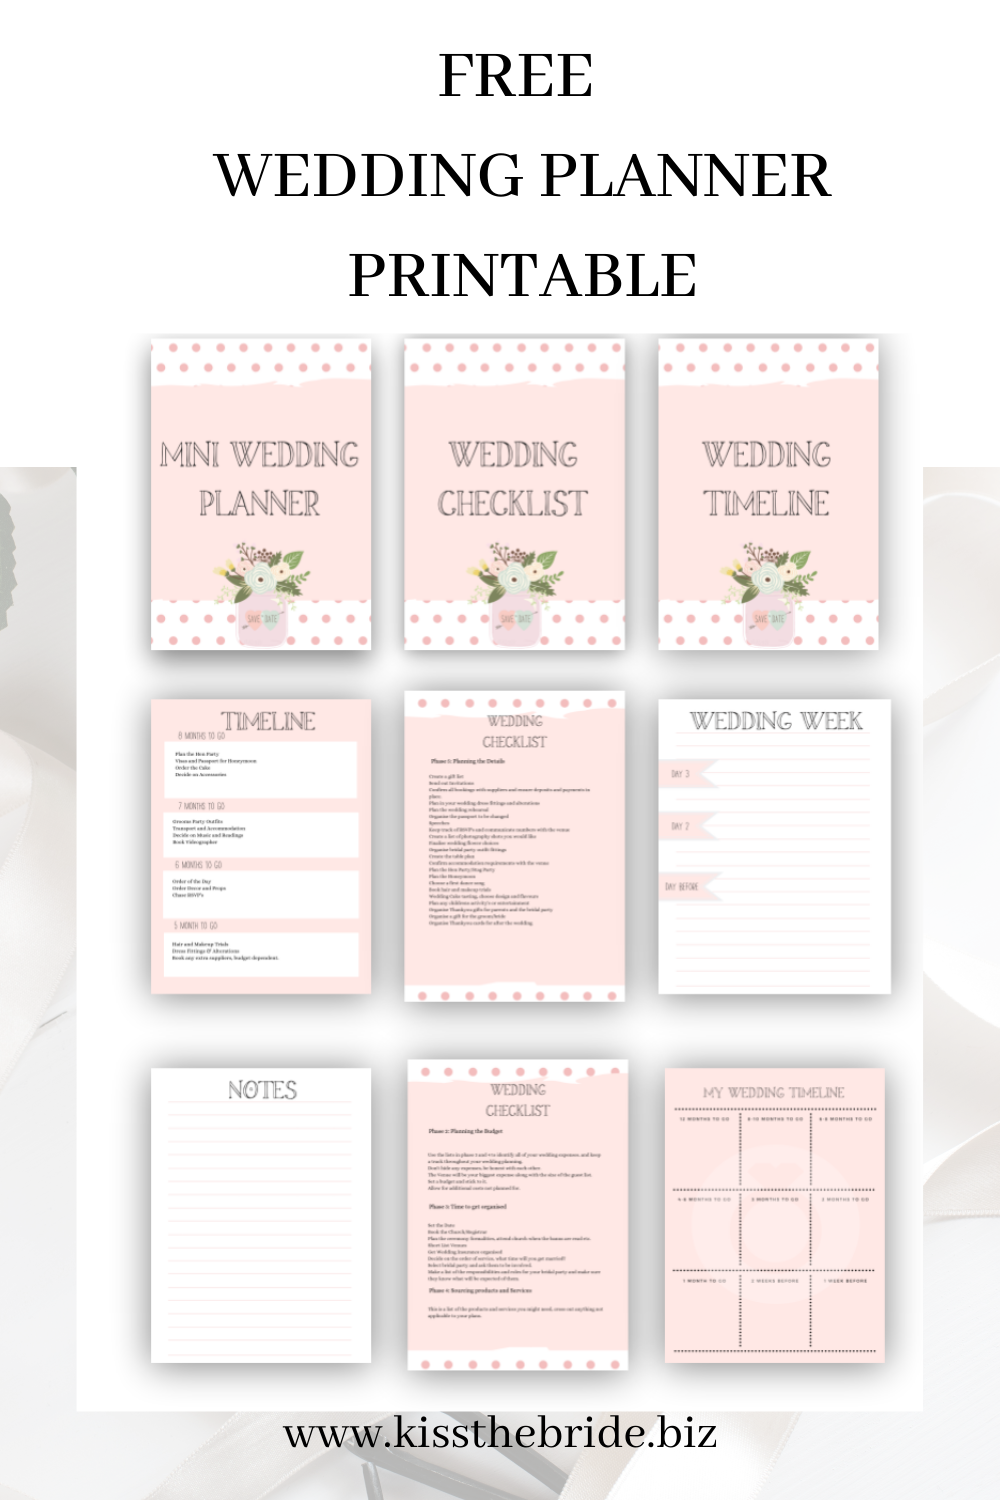 Wedding planning printable